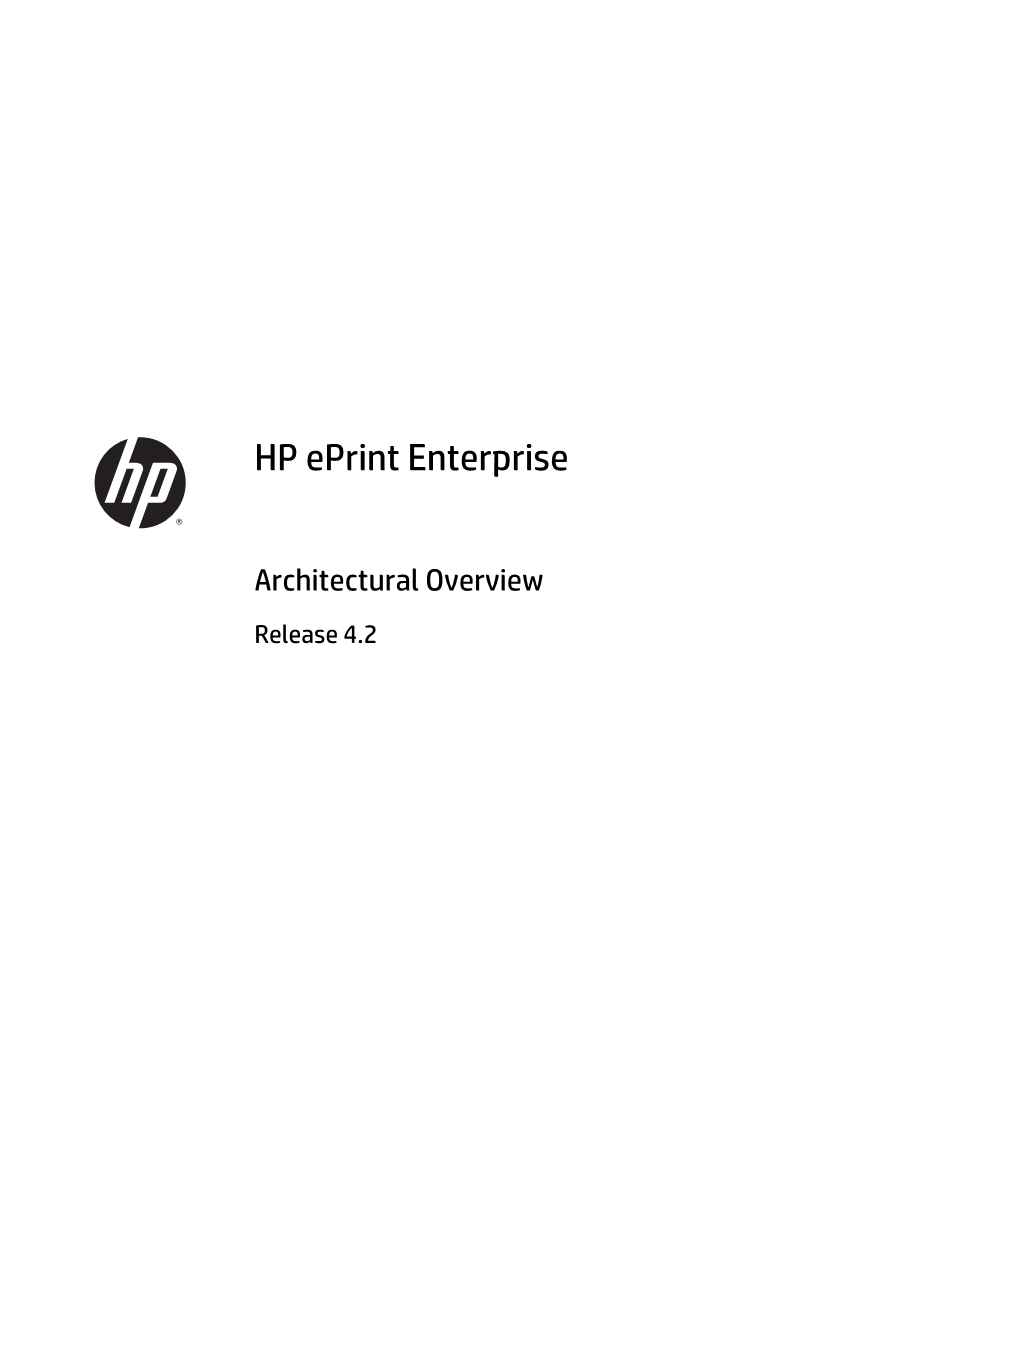 HP Eprint Enterprise Architectural Overview